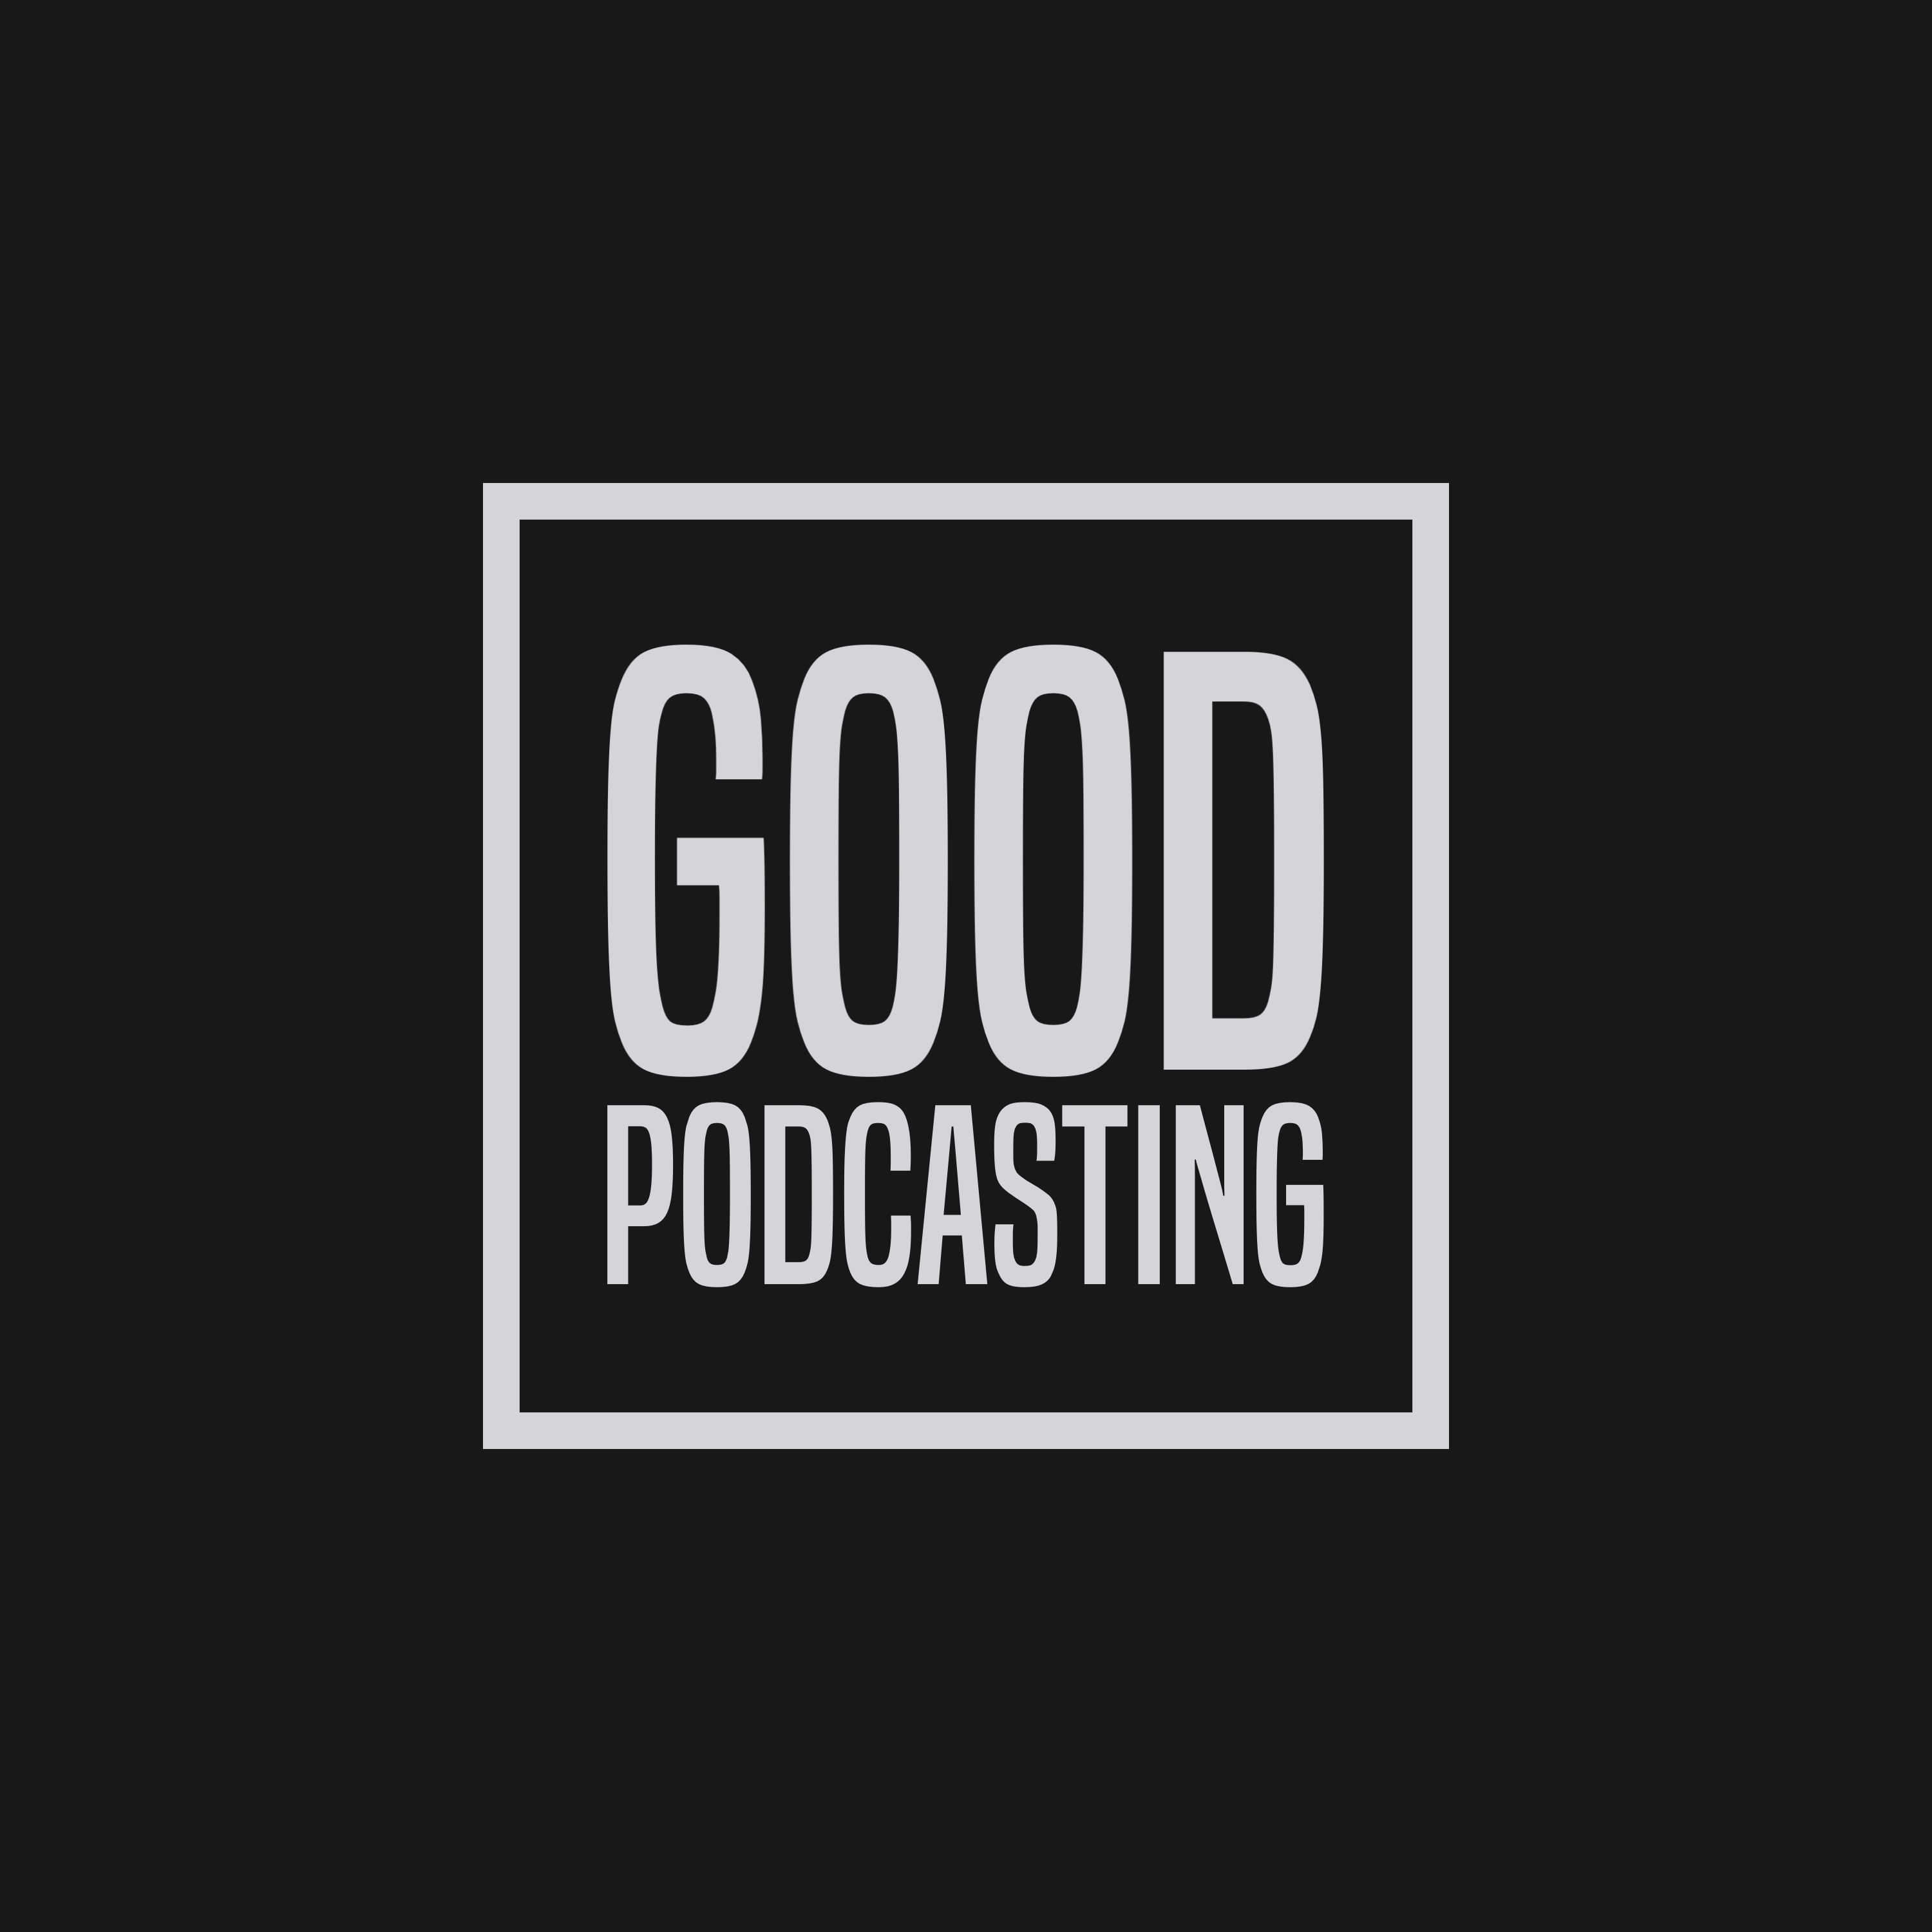 Good Podcasting